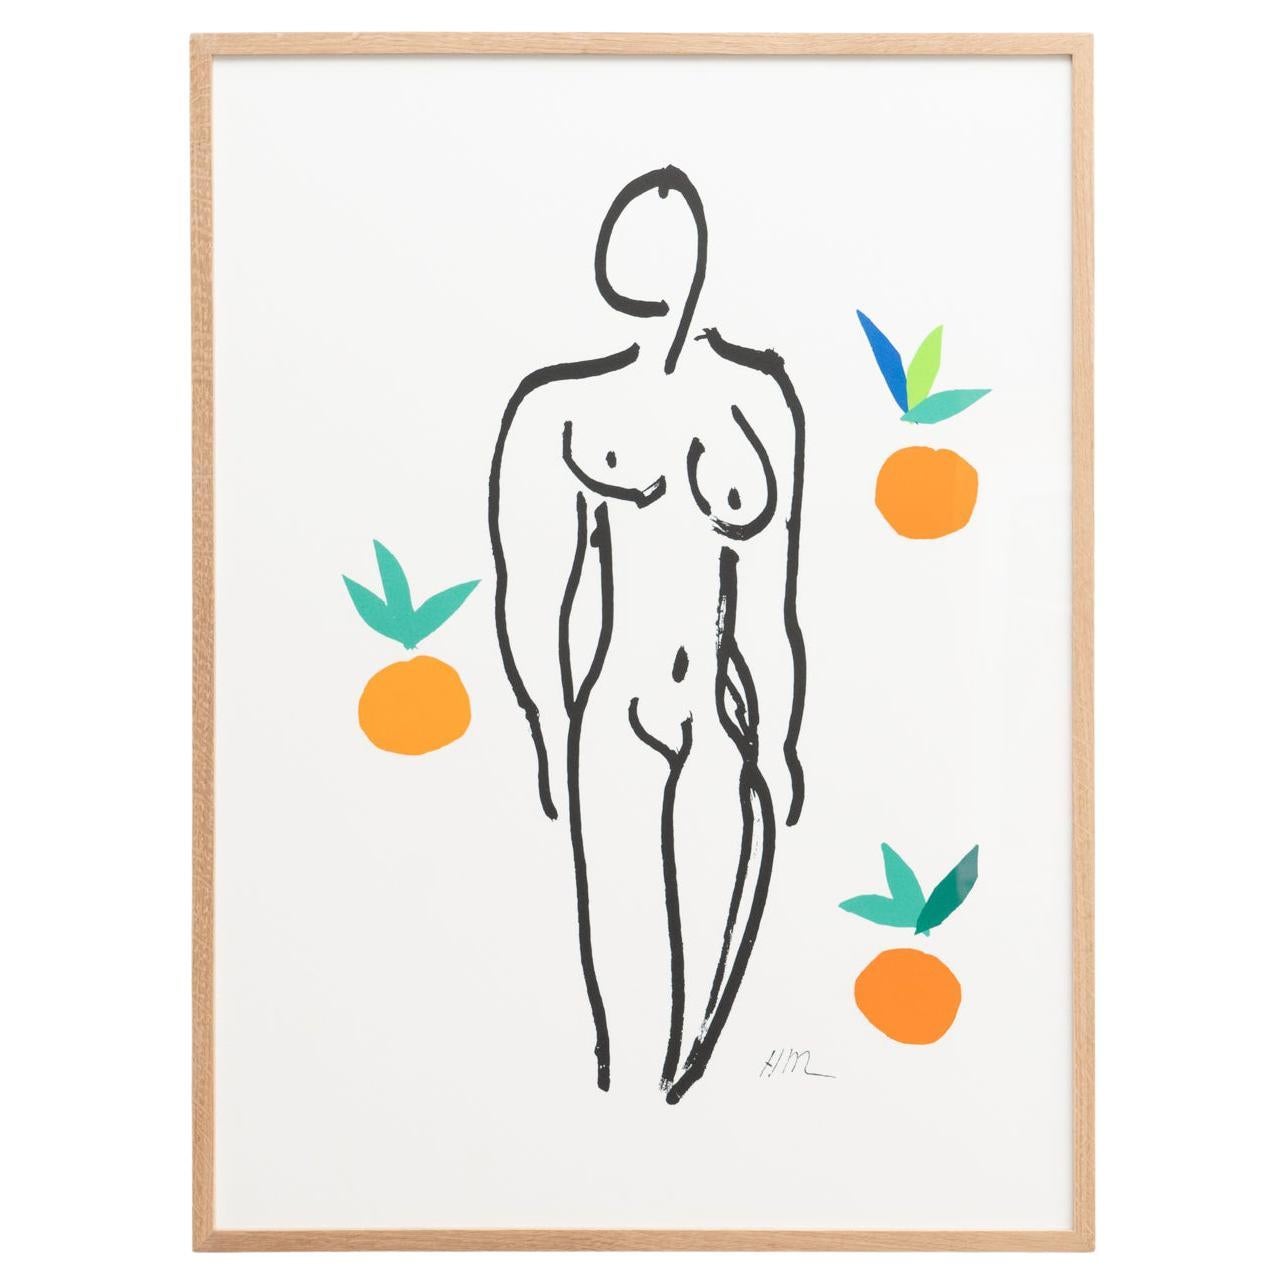 After Henri Matisse 'Nu Aux Orange' Lithograph, circa 2007 For Sale